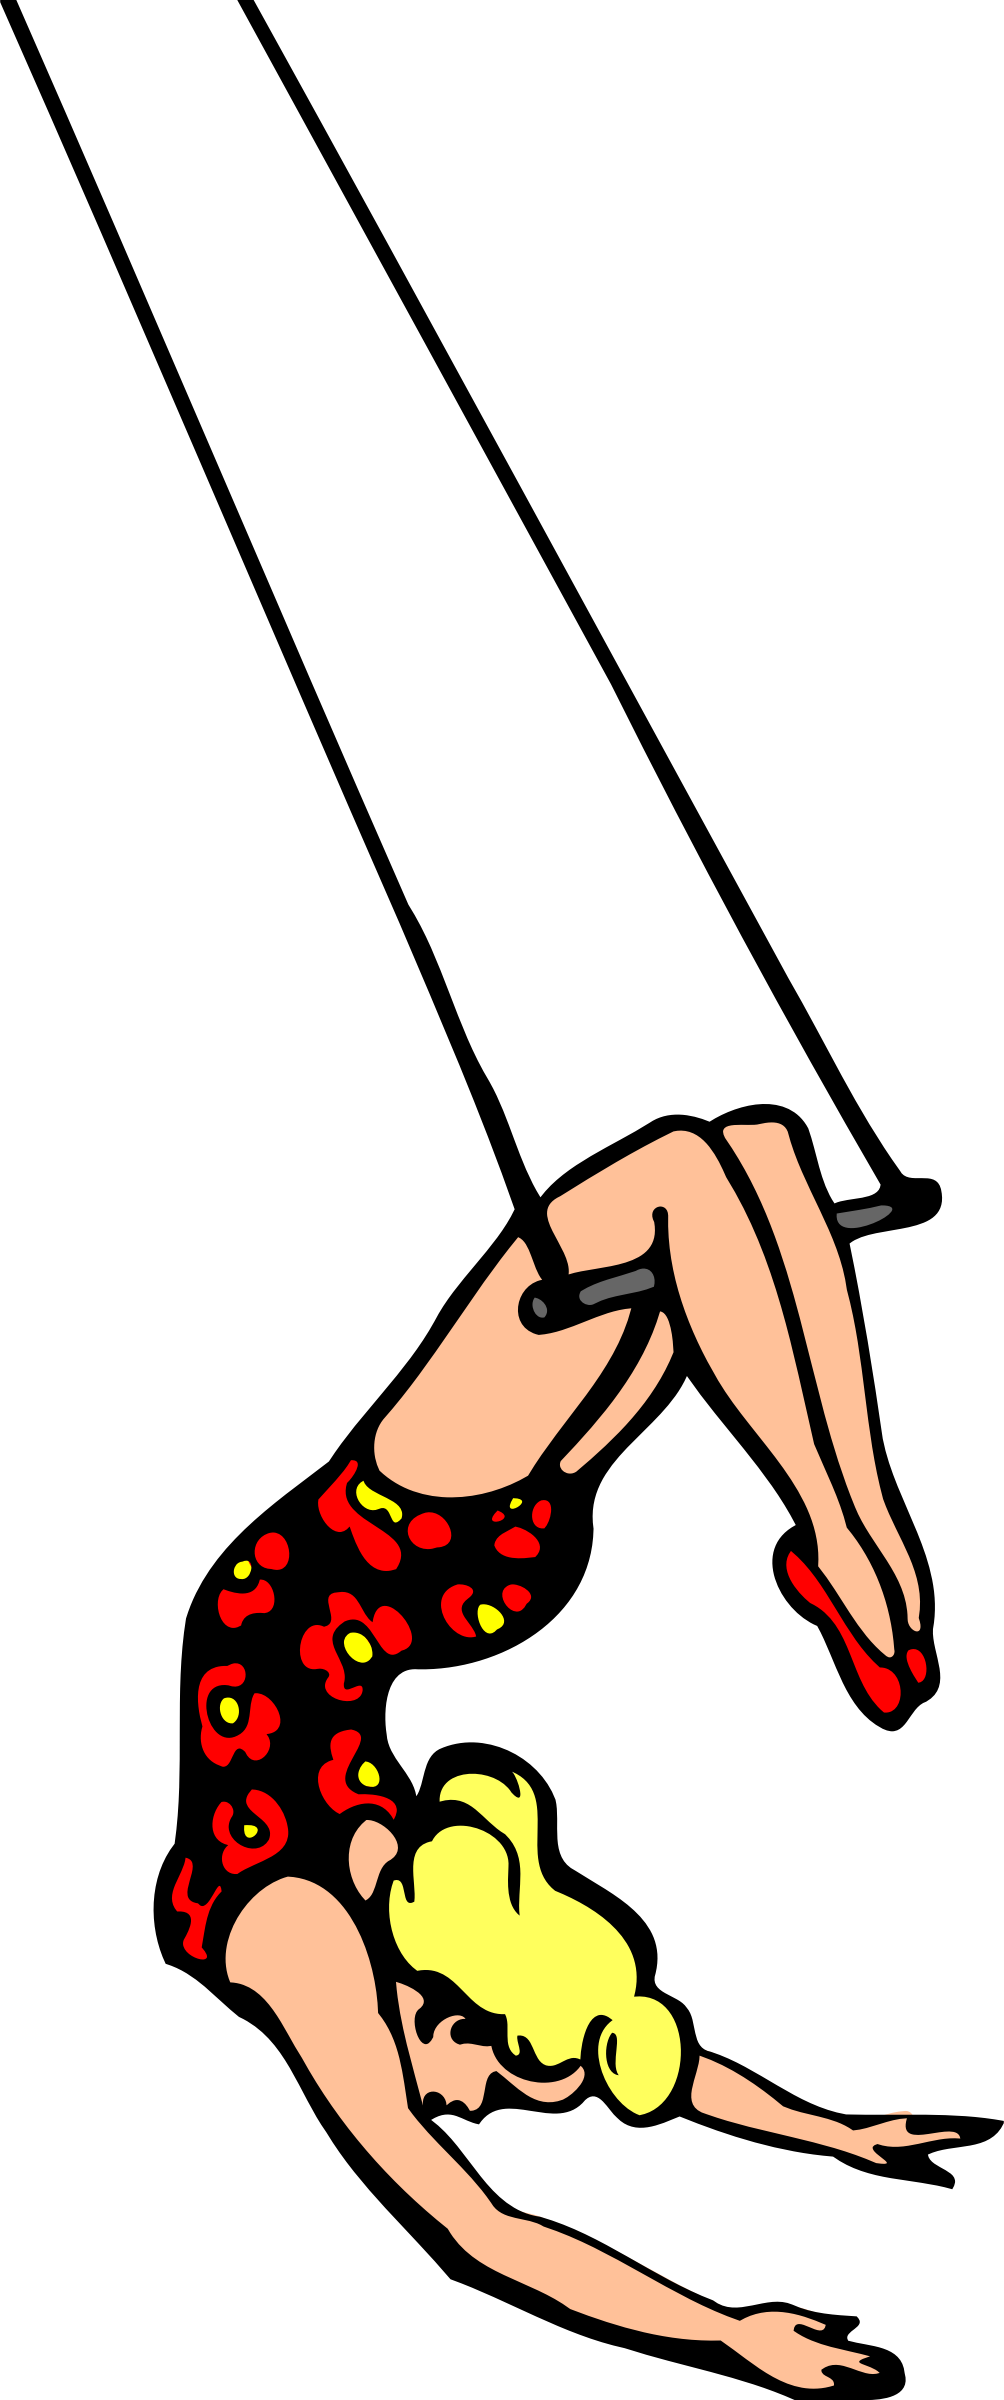 A Cartoon Of A Woman's Legs